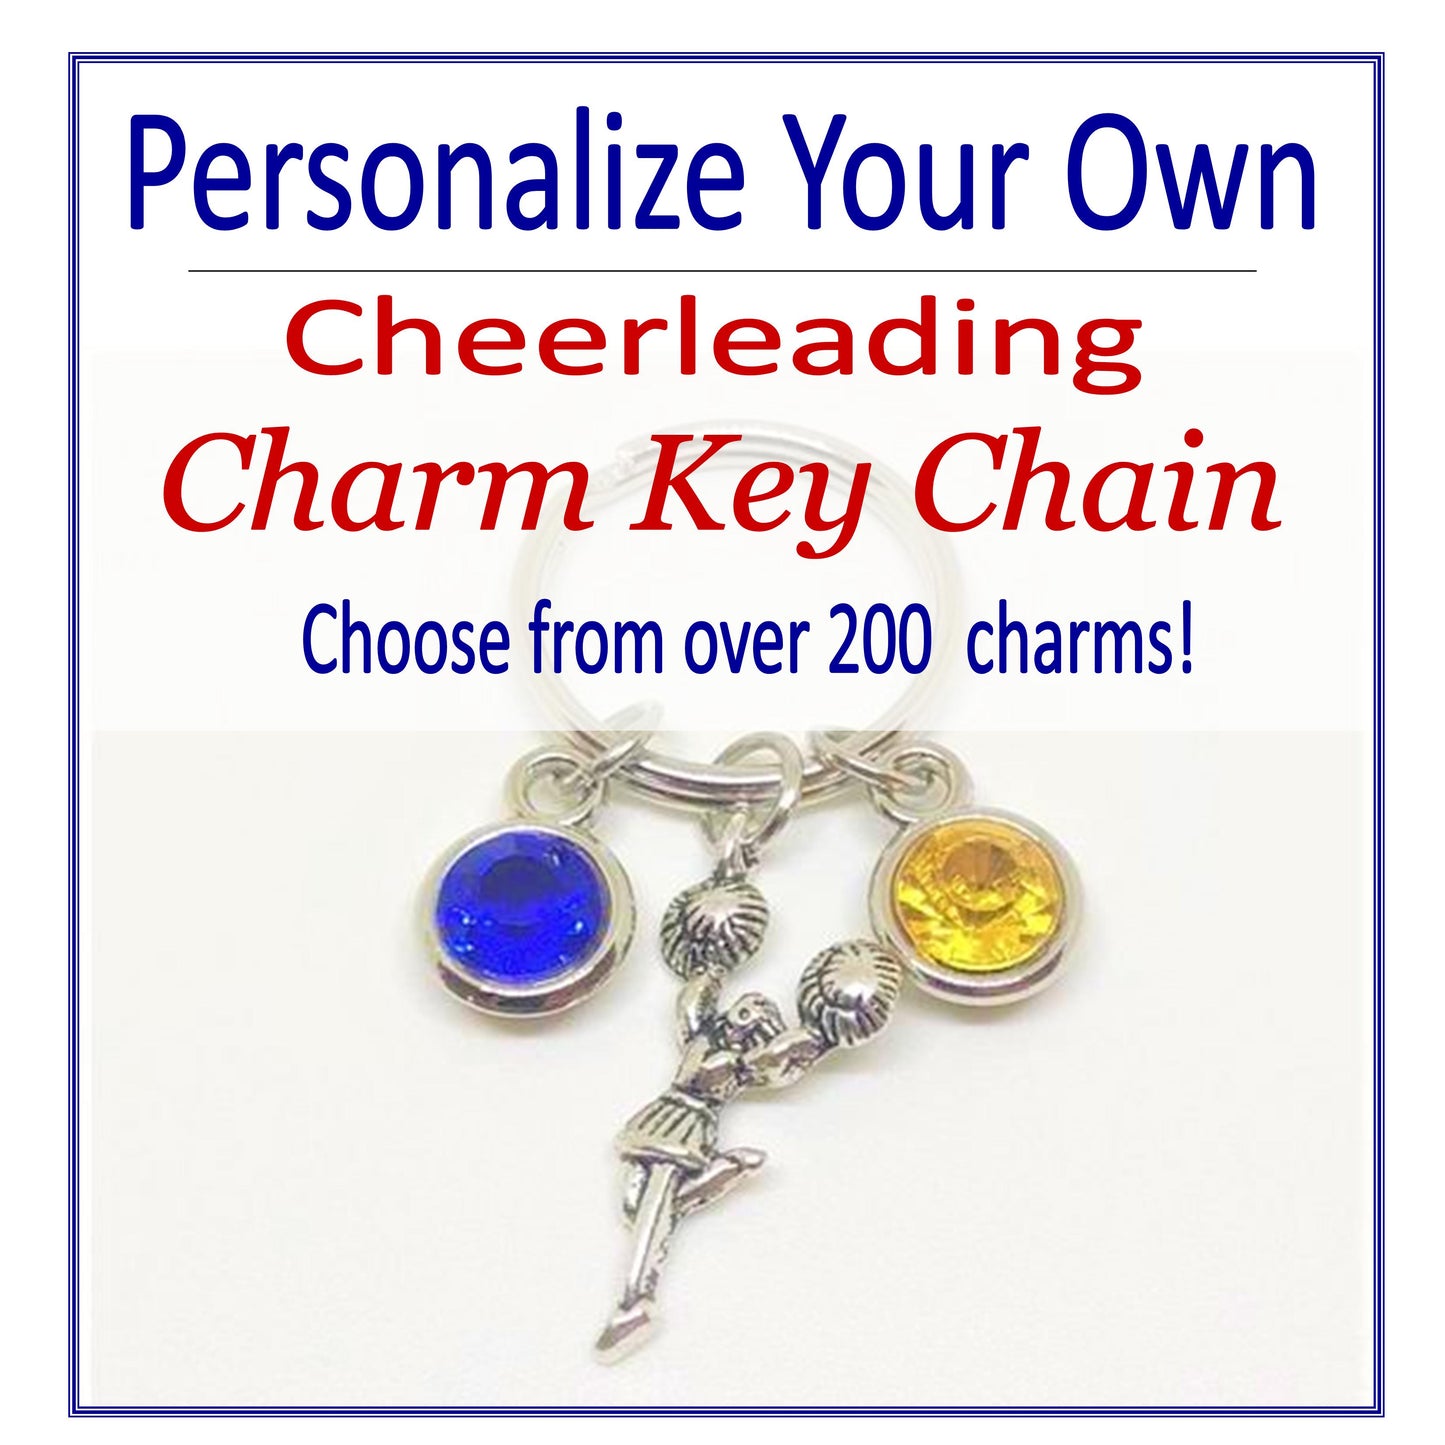 Create Your Own Cheerleading Charm Key Chain, Cheerleading Accessories - Cheer and Dance On Demand